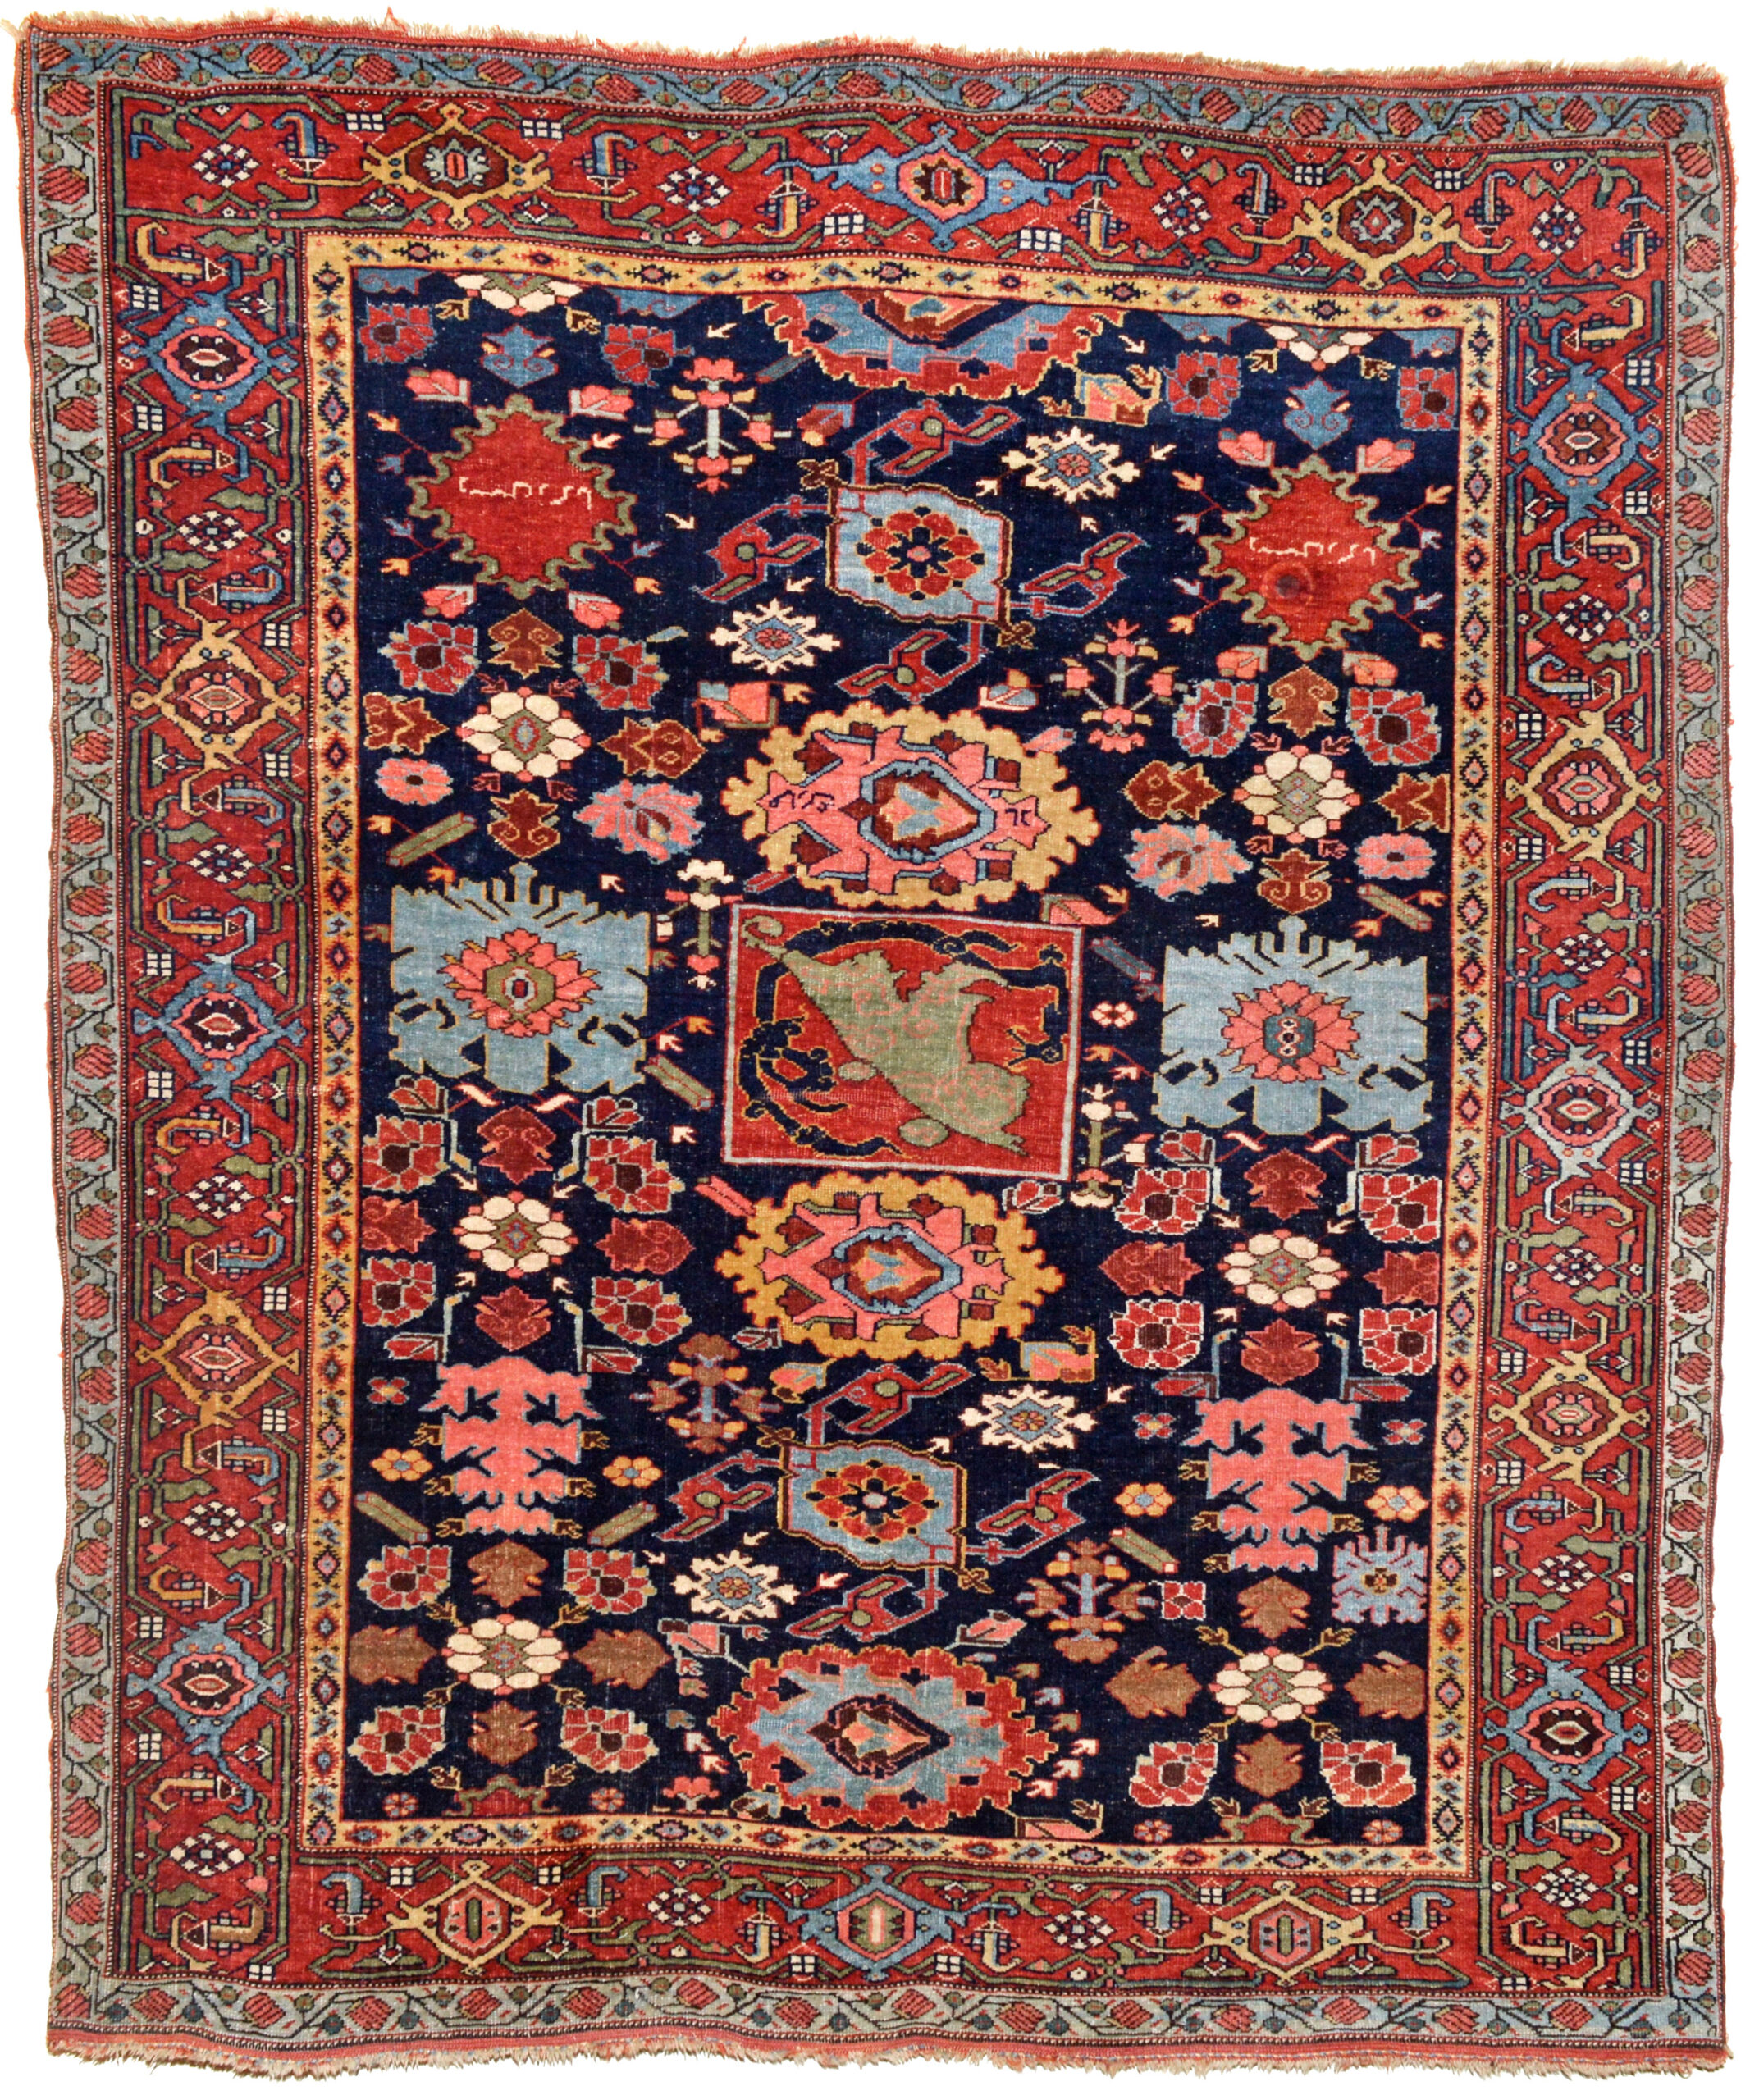 Antique Harshang design Bidjar rug with a navy blue field and red border, northwest Persia, Kurdistan province, circa 1880